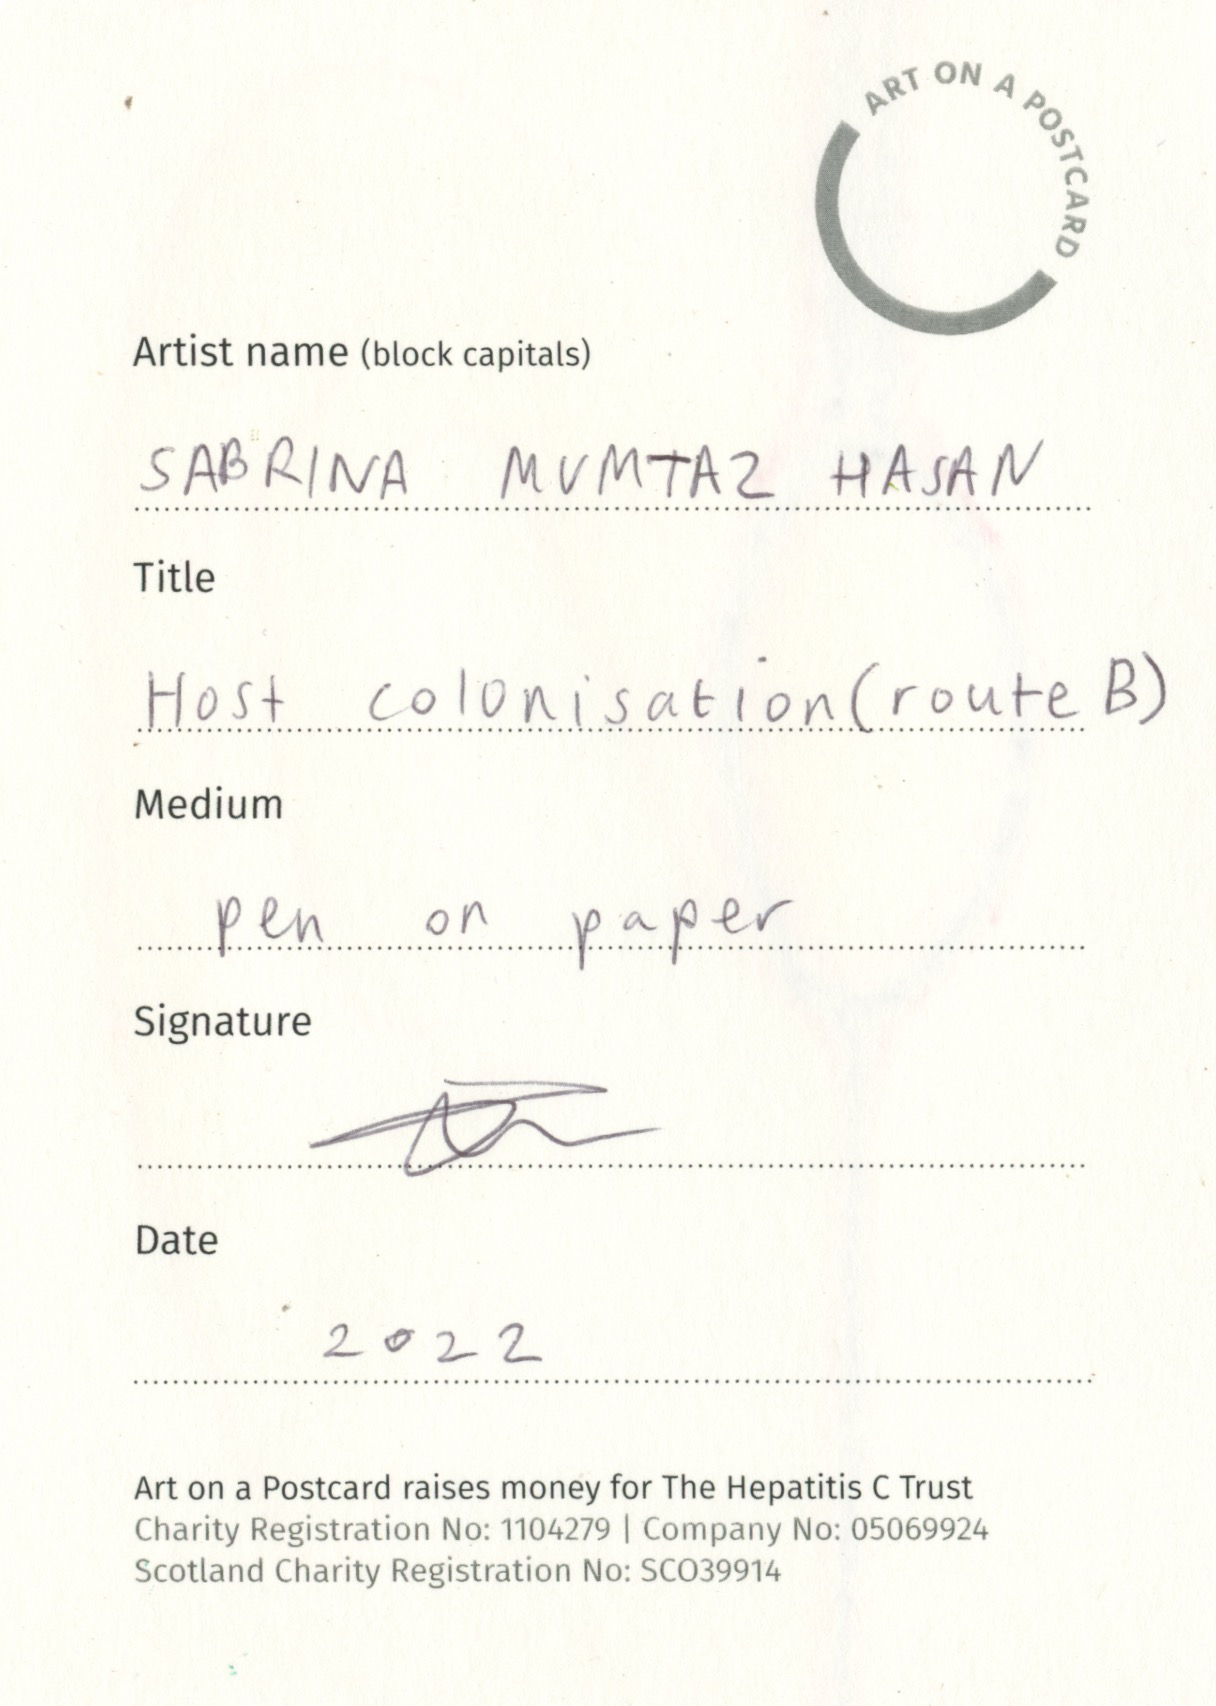 15. Sabrina Mumtaz Hasan - Host Colonisation (Route B) - BACK